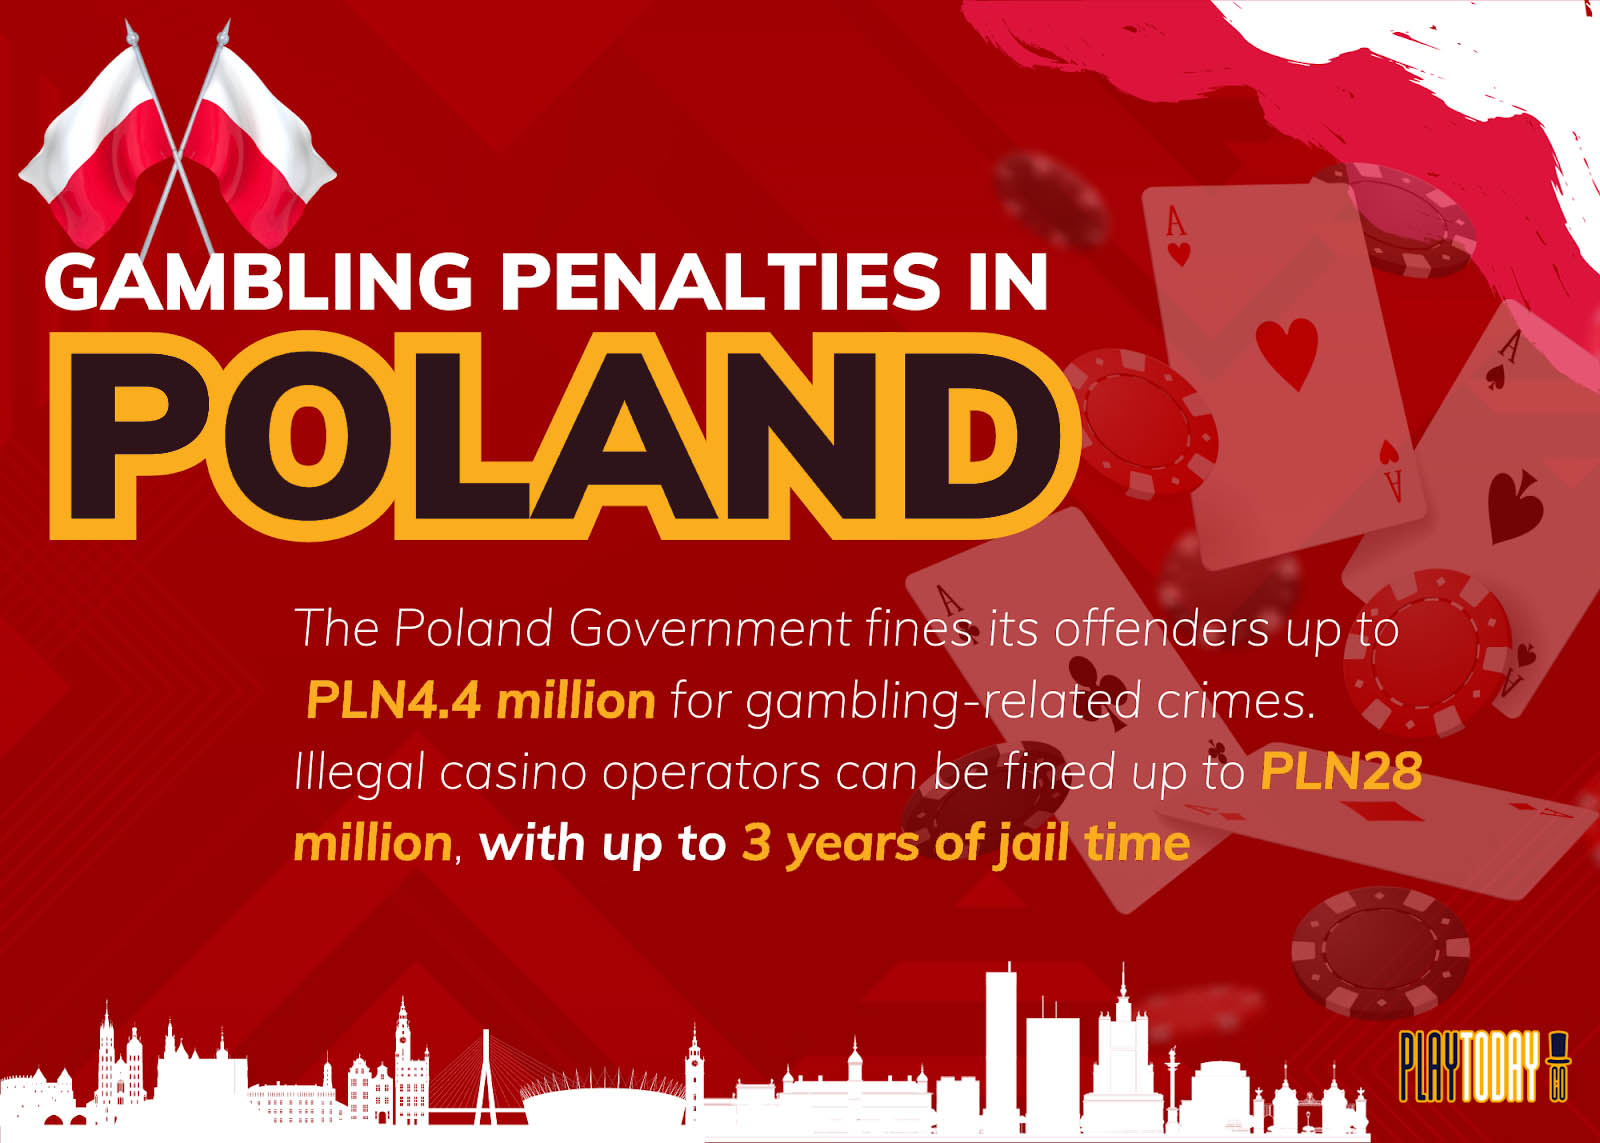 Visual representation of gambling penalties in Poland